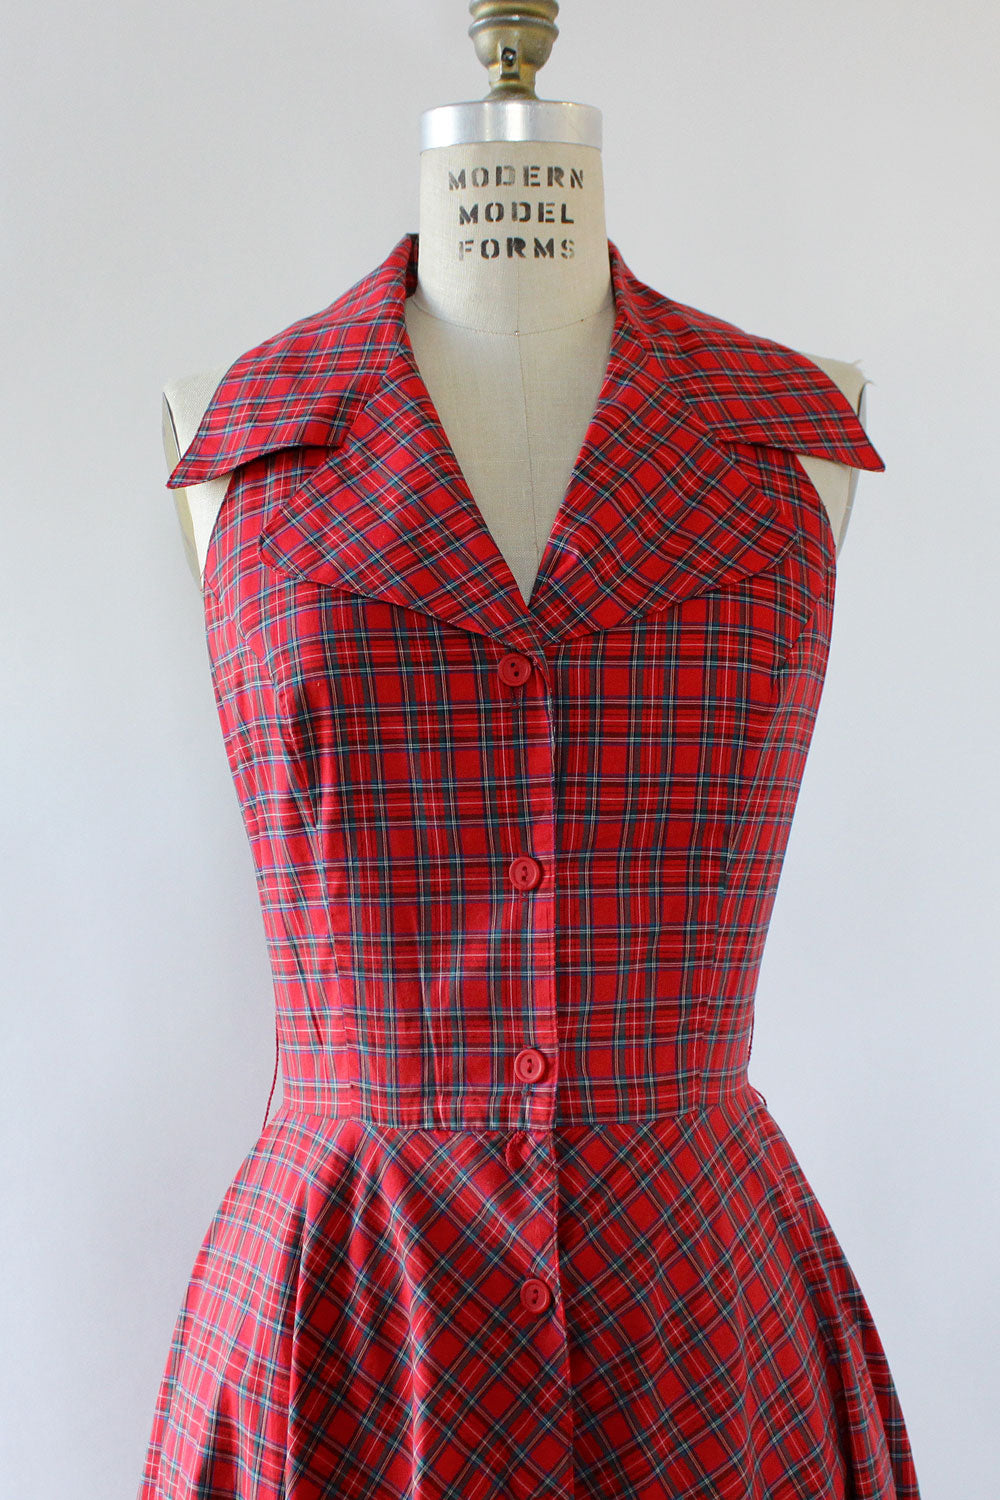 Scottish Plaid Cotton Dress M